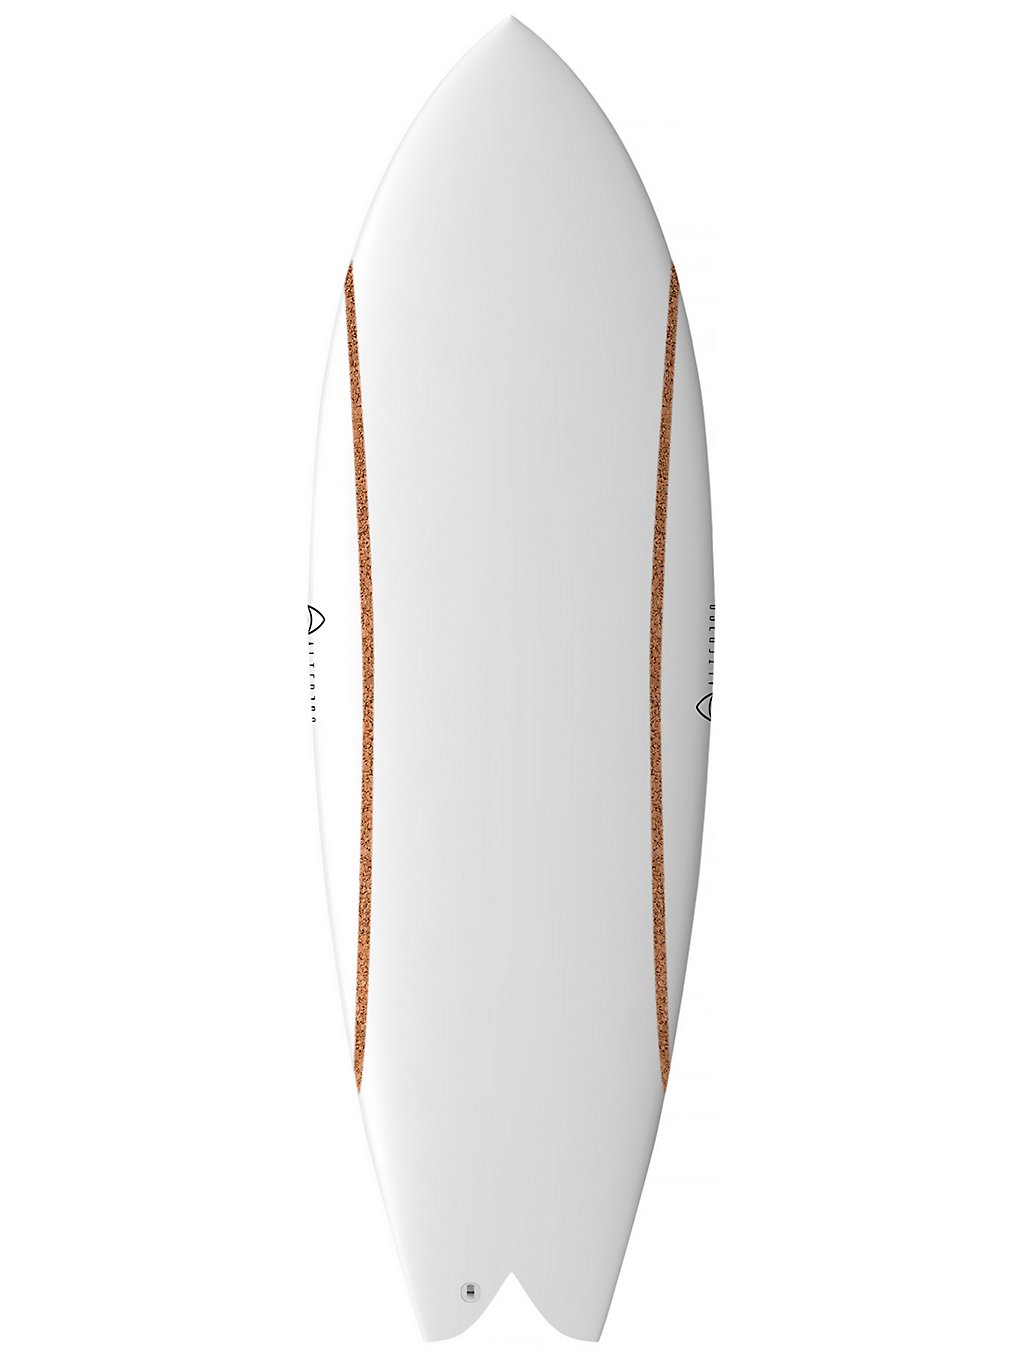 Alterego Corsair 5'5 Surfboard cork